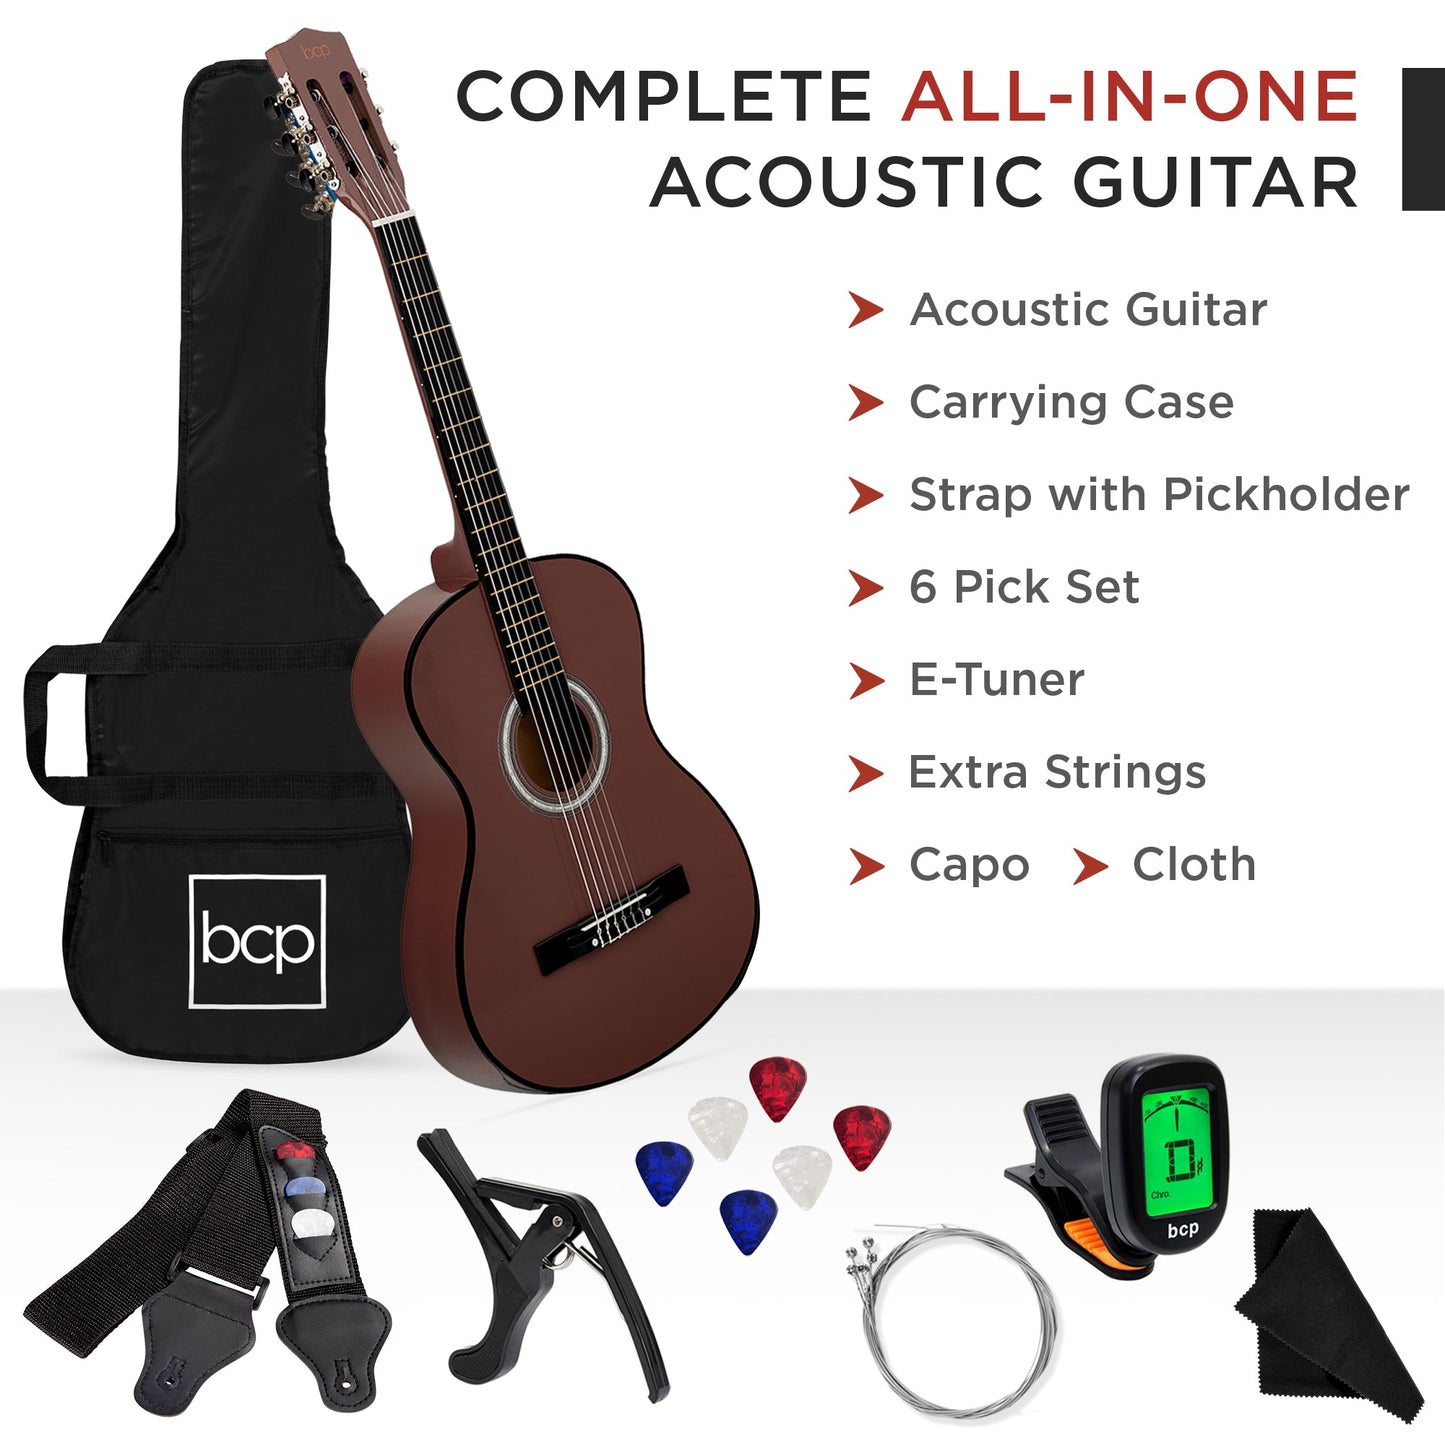 Beginner Acoustic Guitar Set w/ Case, Strap, Digital Tuner, Strings - 38in